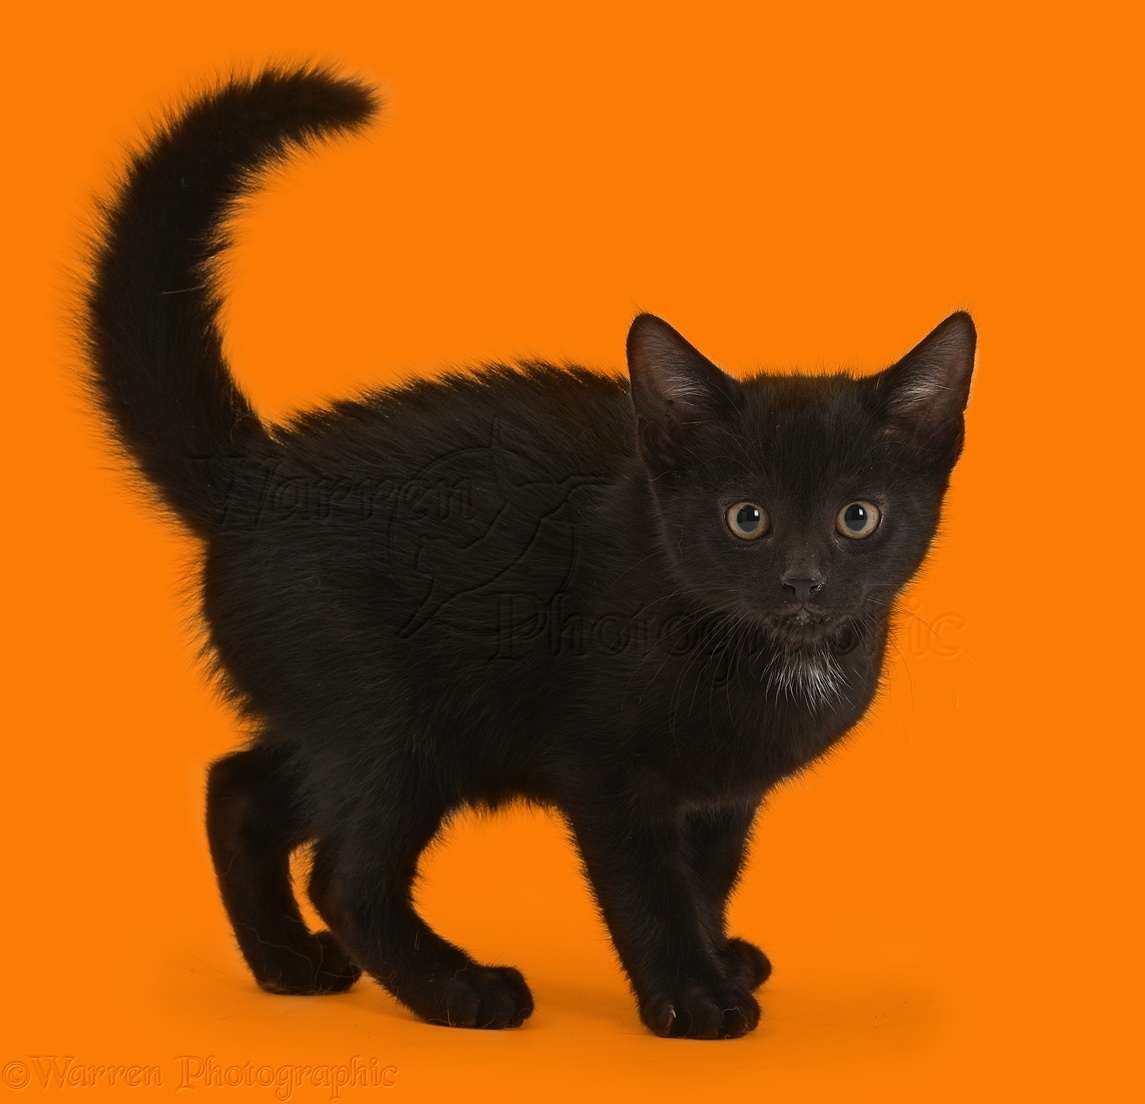 http://www.warrenphotographic.co.uk/photography/bigs/36539-Black-kitten-frightened-white-background.jpg